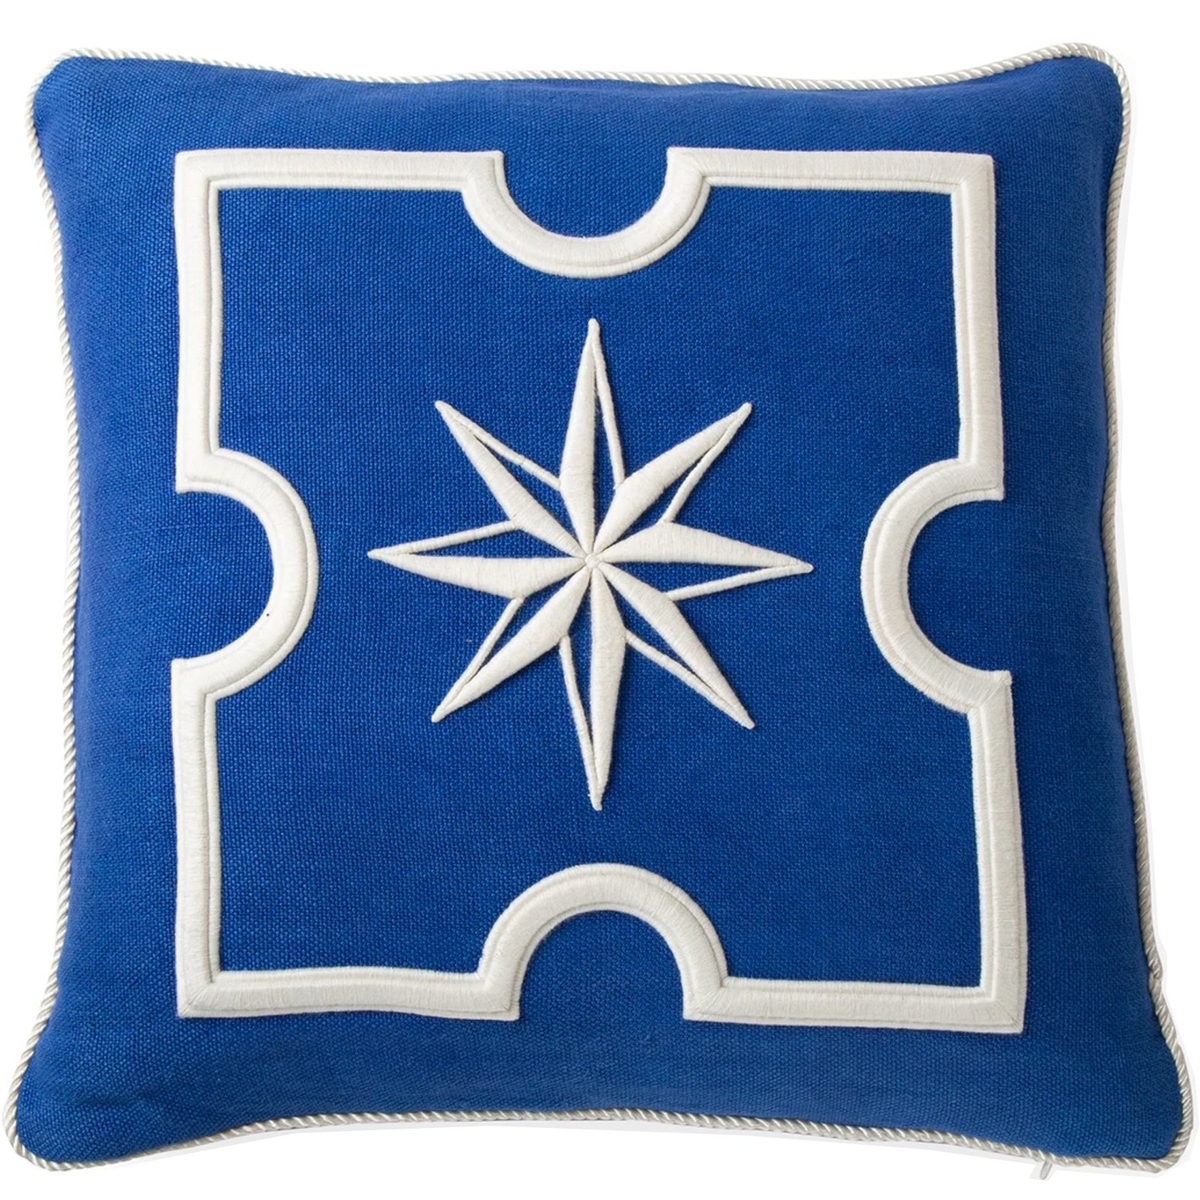 Maxime Star Cushion, Blue and White